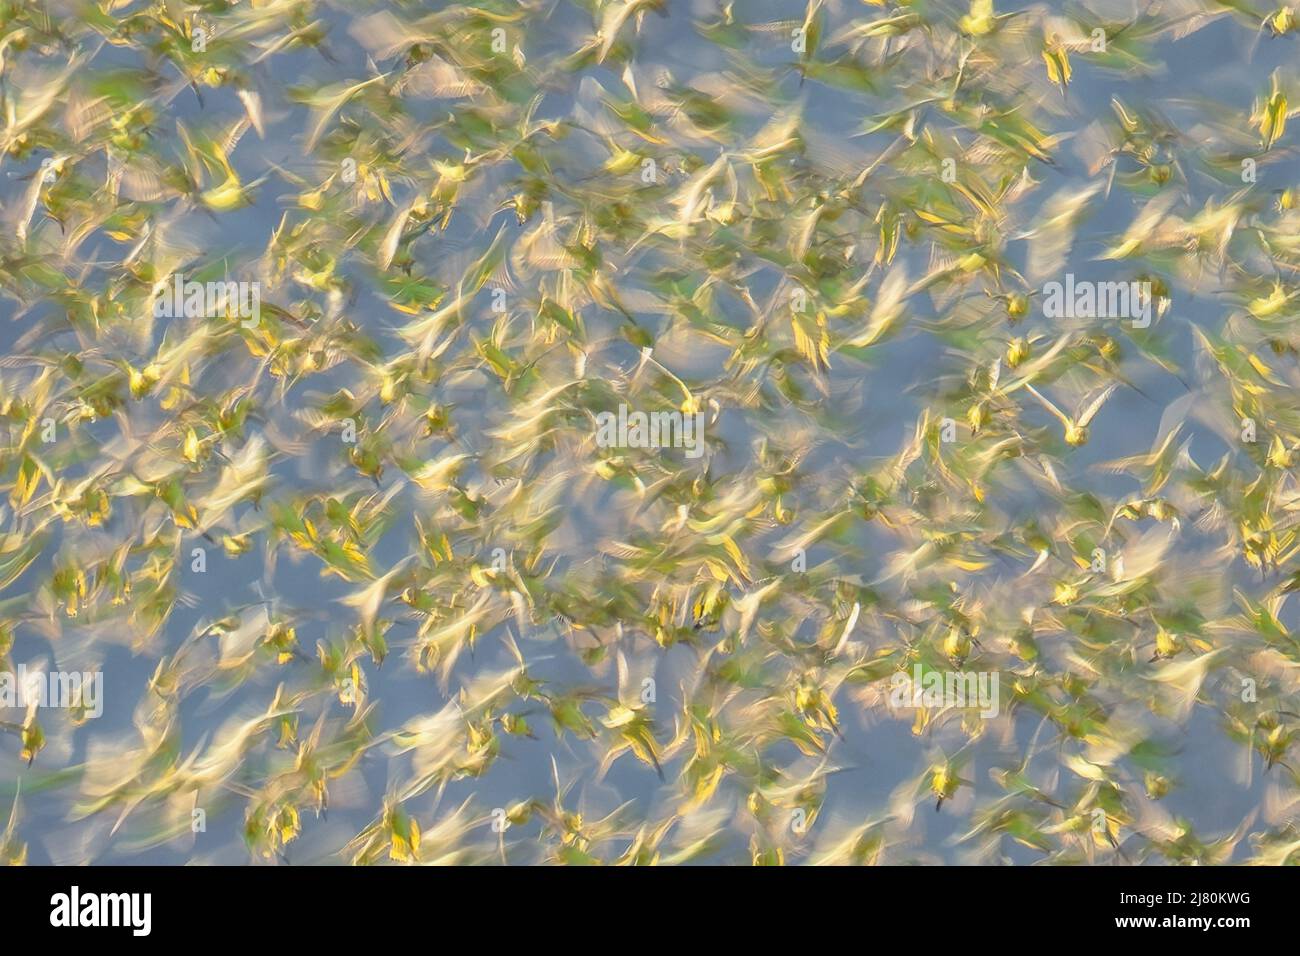 Abstract blurred photo of a large flock of Budgerigar (Melopsittacus undulatus) in flight, Australia Stock Photo